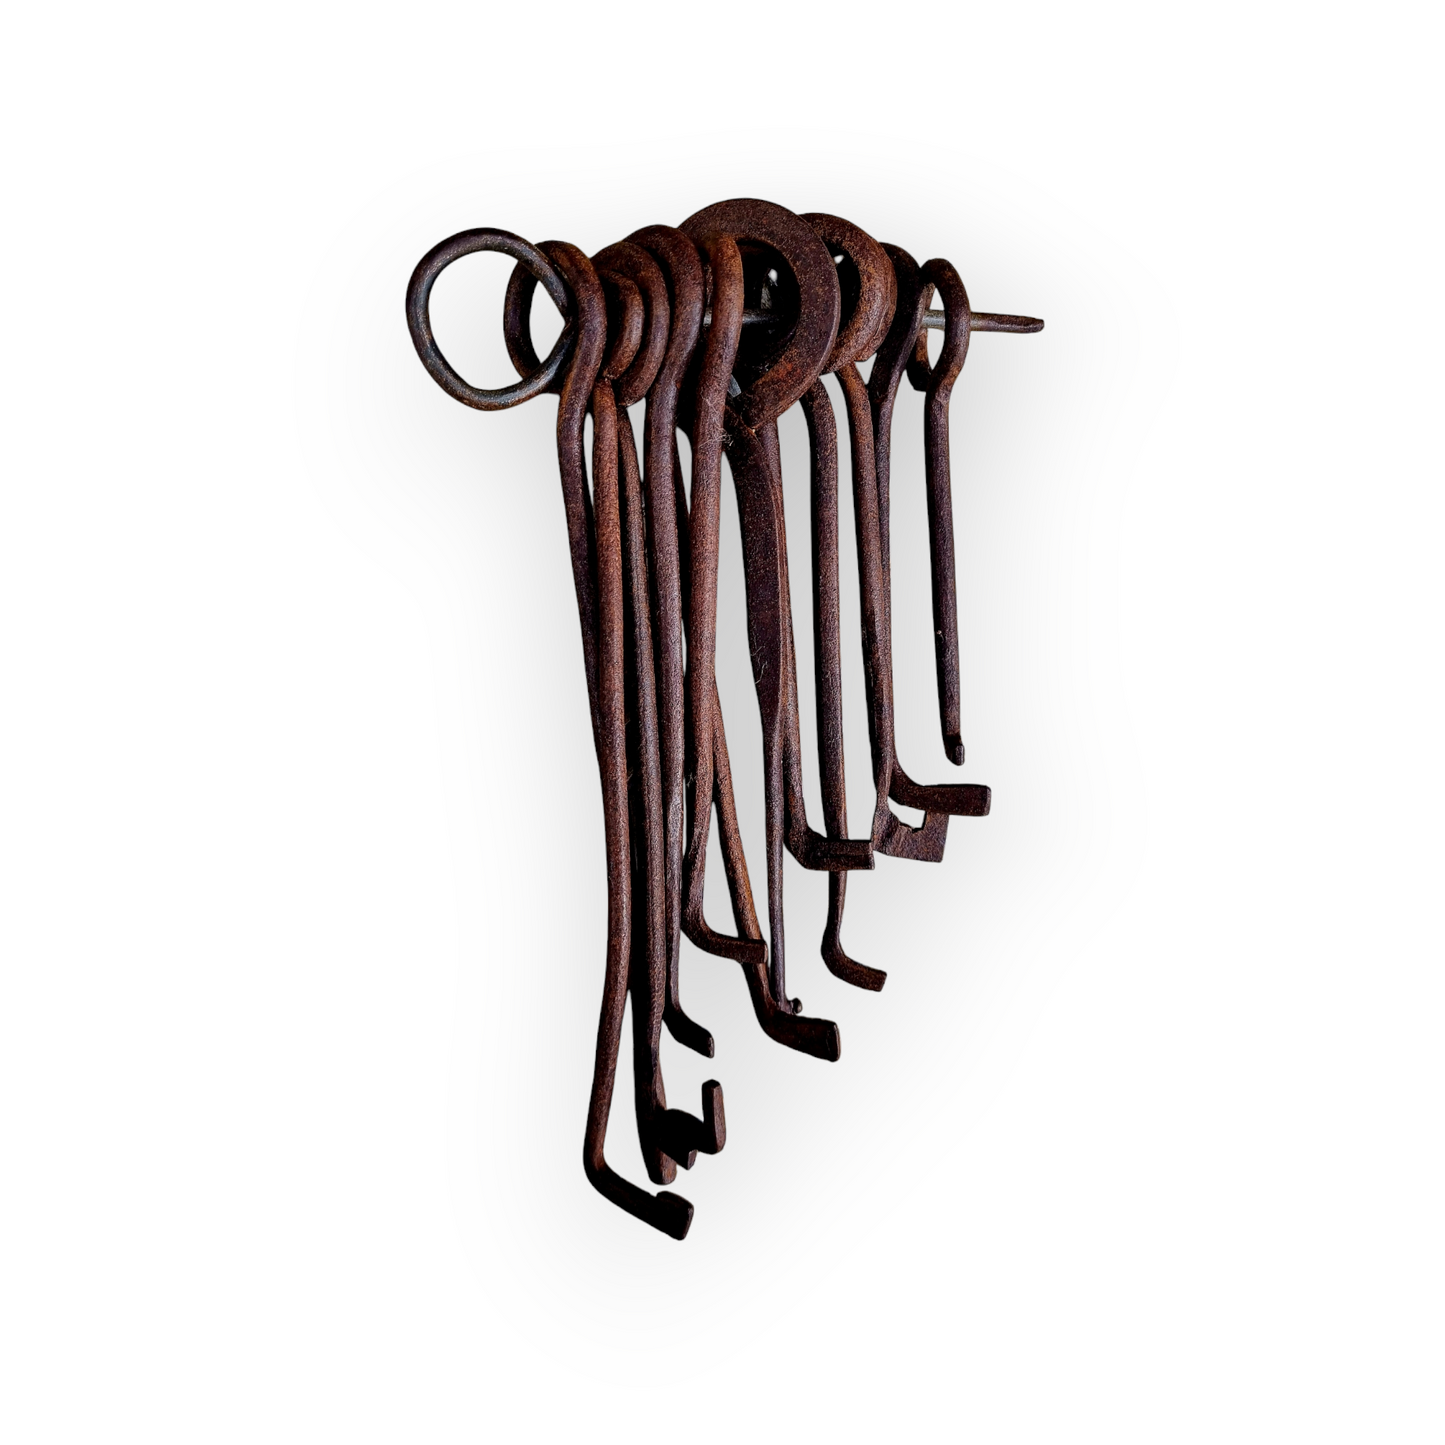 Set of Twelve Late 18th Century Antique Iron Lock Picks or Skeleton Keys